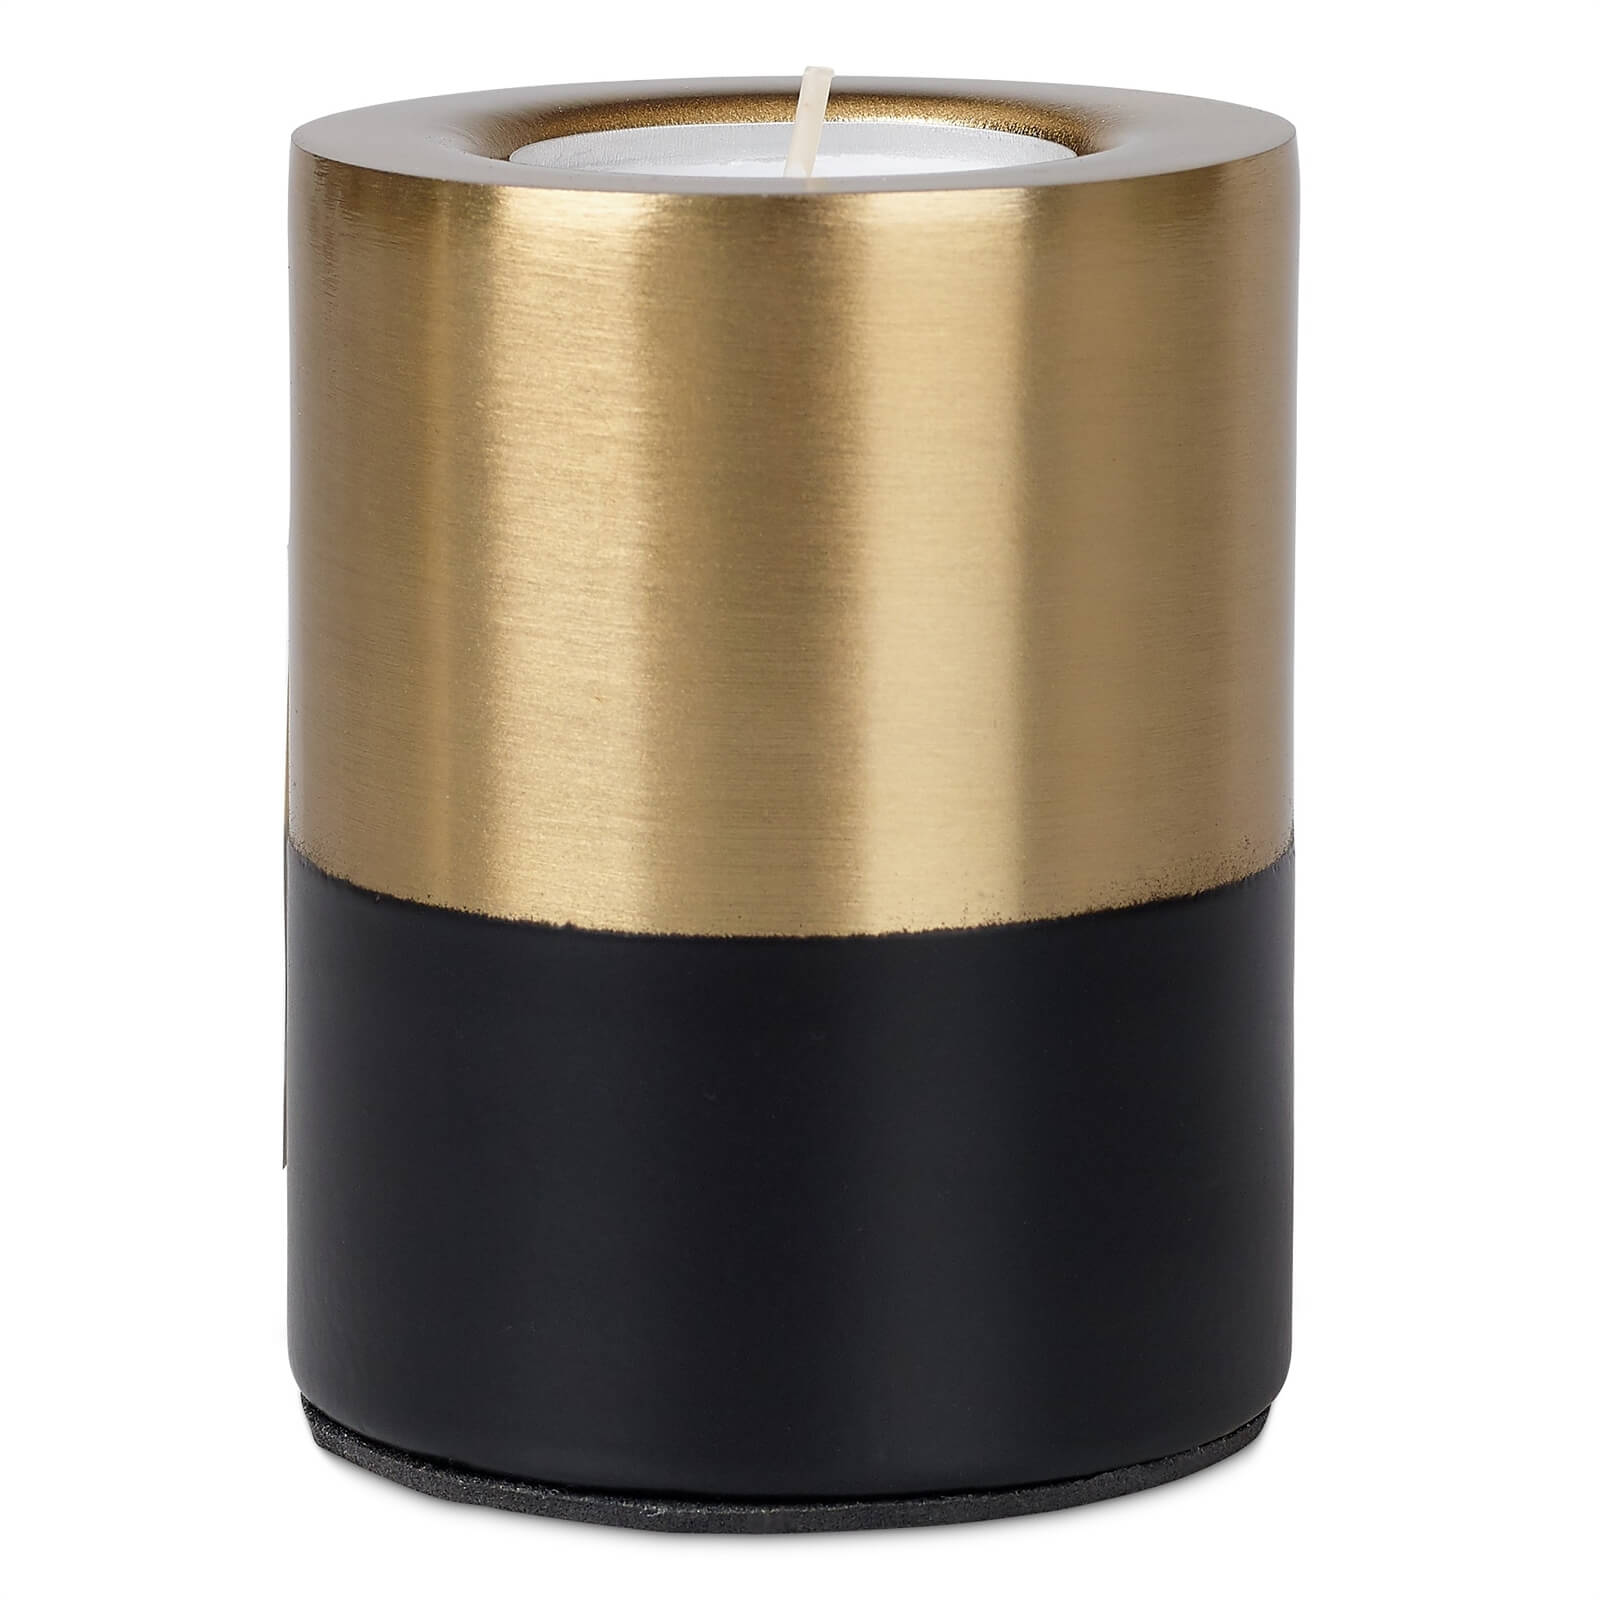 Iron Tea Light Holder - Black and Gold